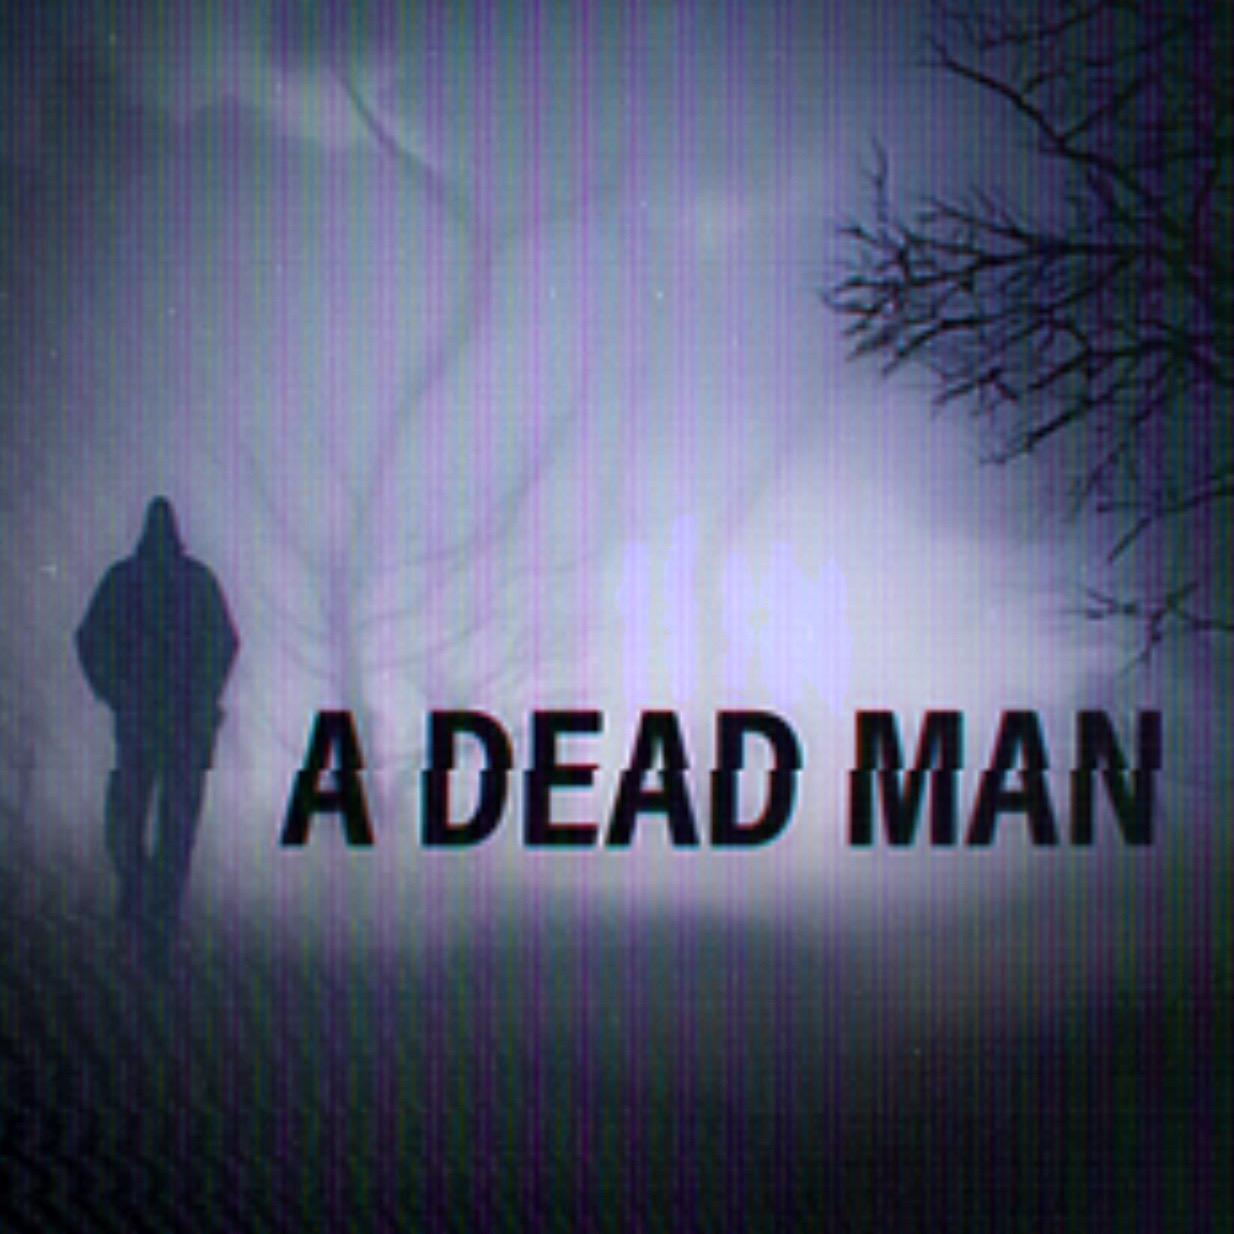 A DEAD MAN